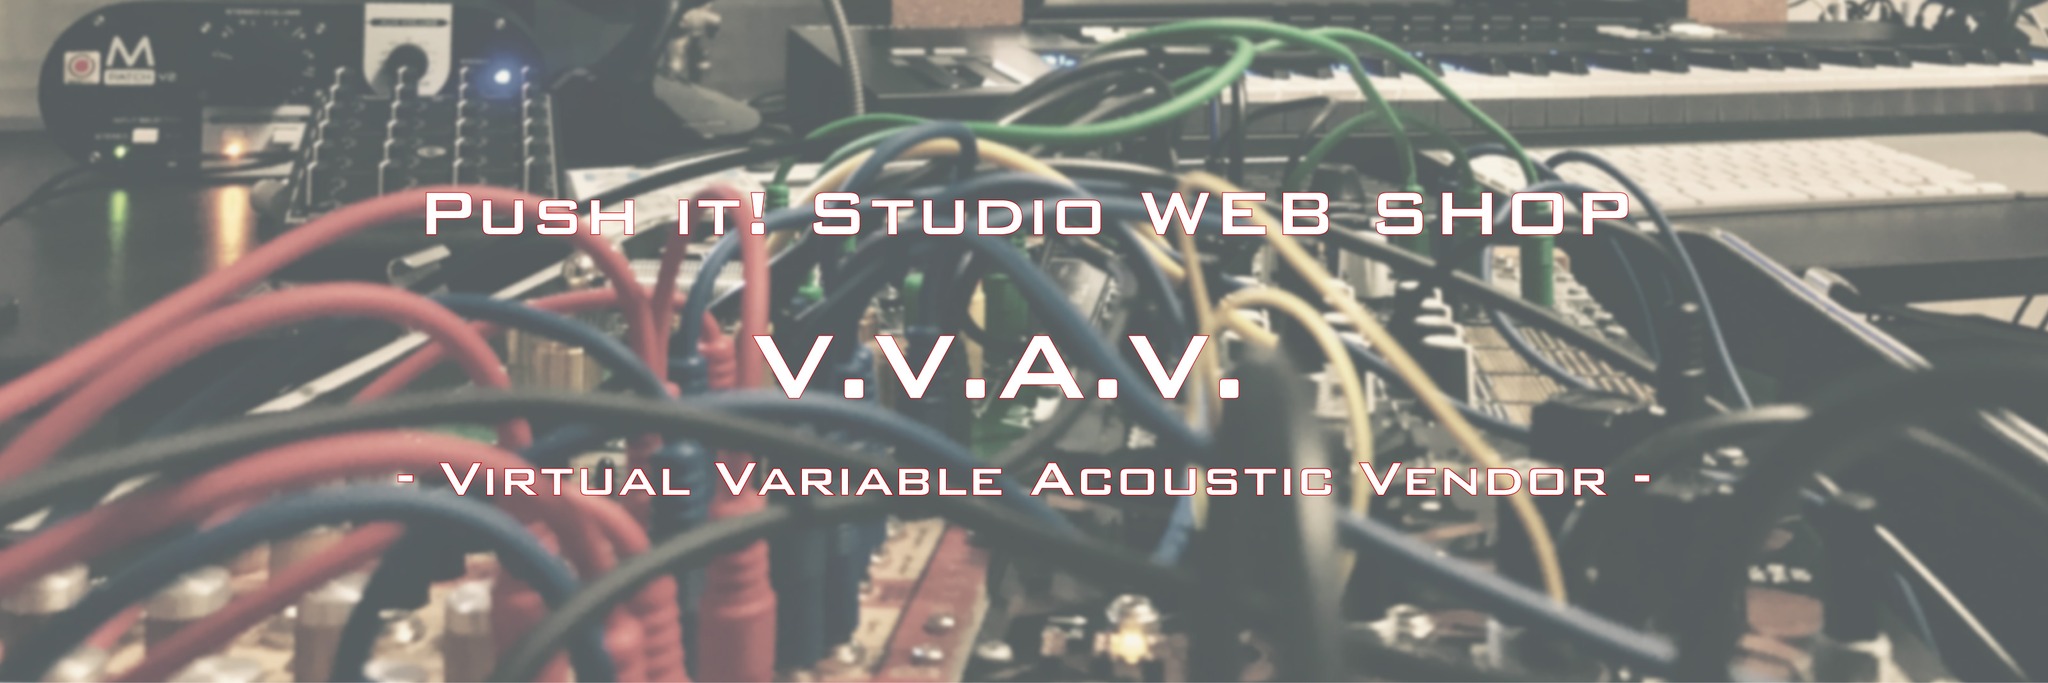 Push it! Studio Web Shop "V.V.A.V."